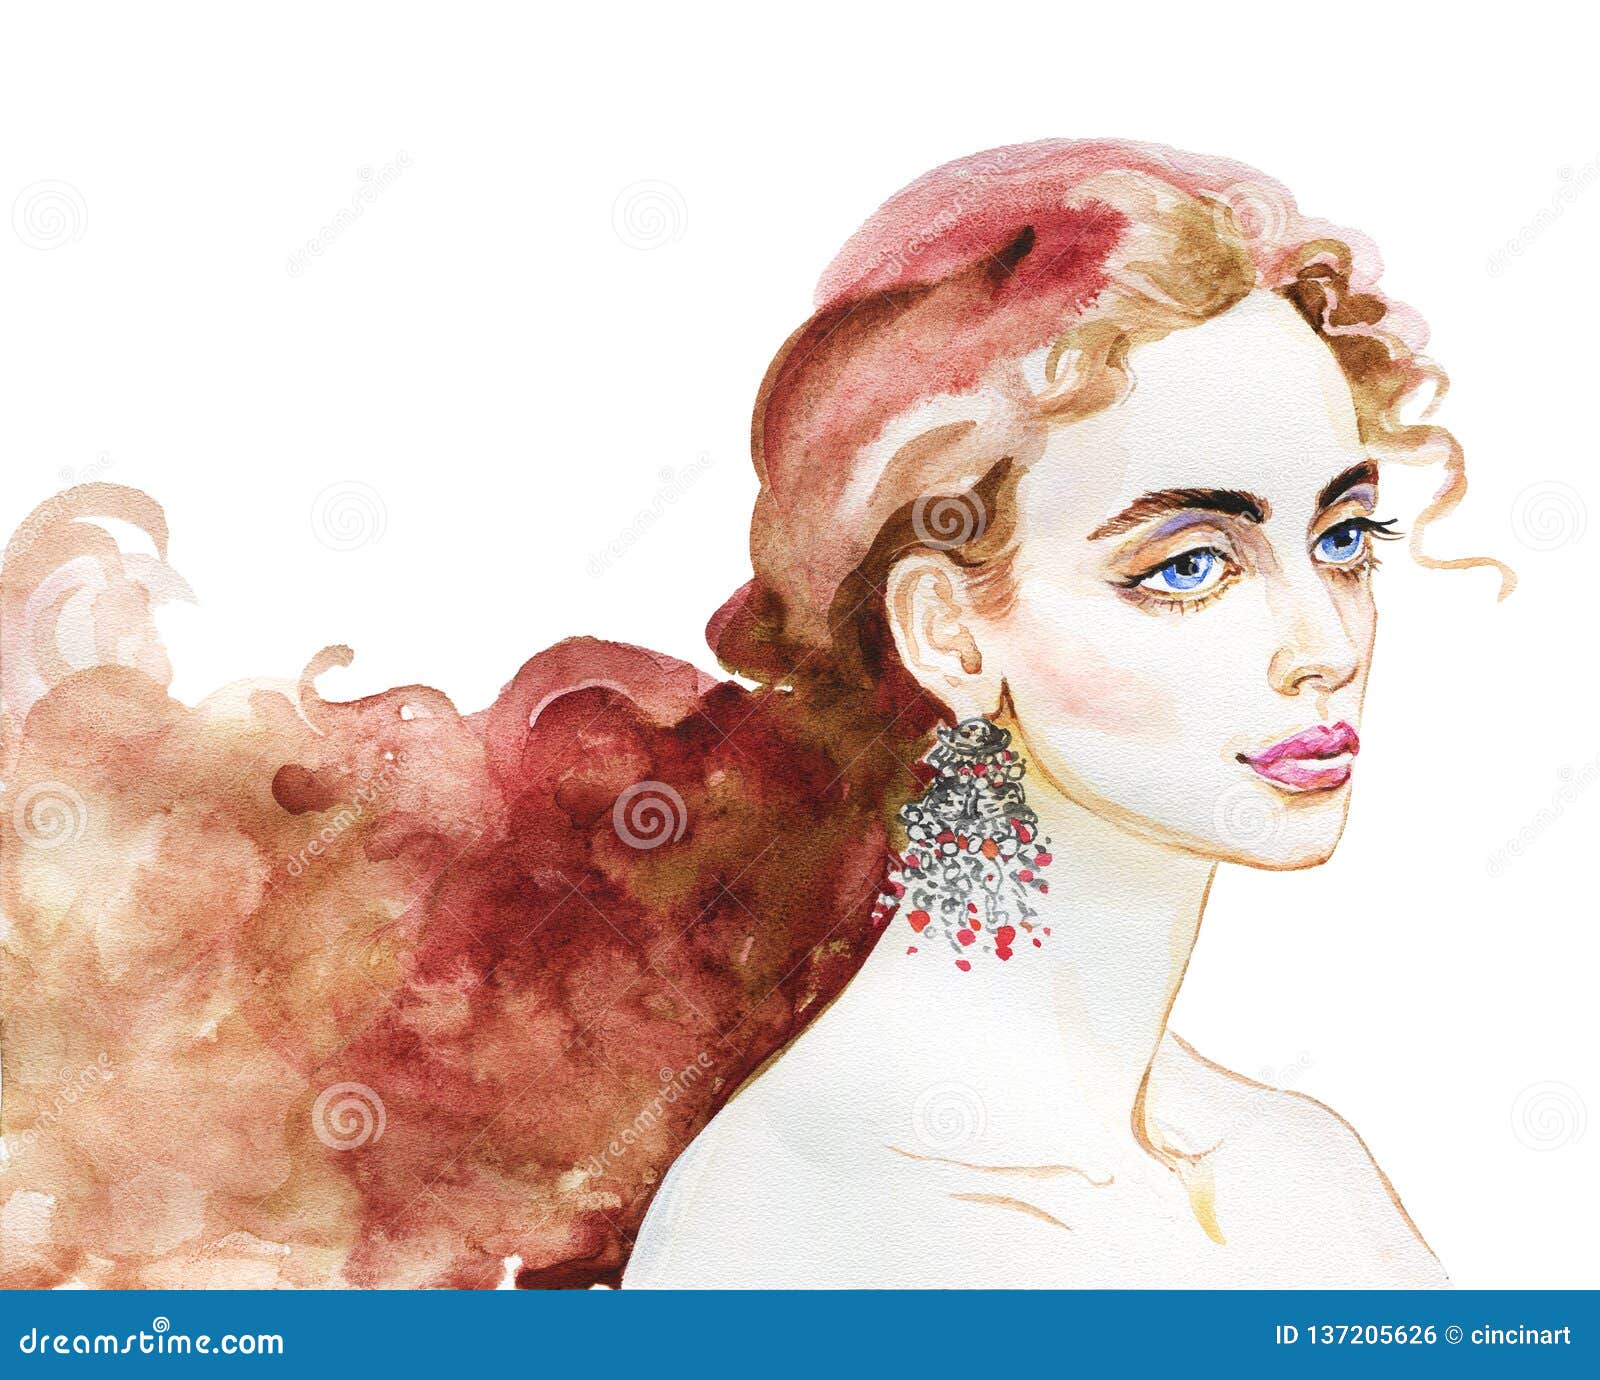 Watercolor Portrait Of Beautiful Woman Stock Illustration - Illustration Of Eyes, Makeup: 137205626